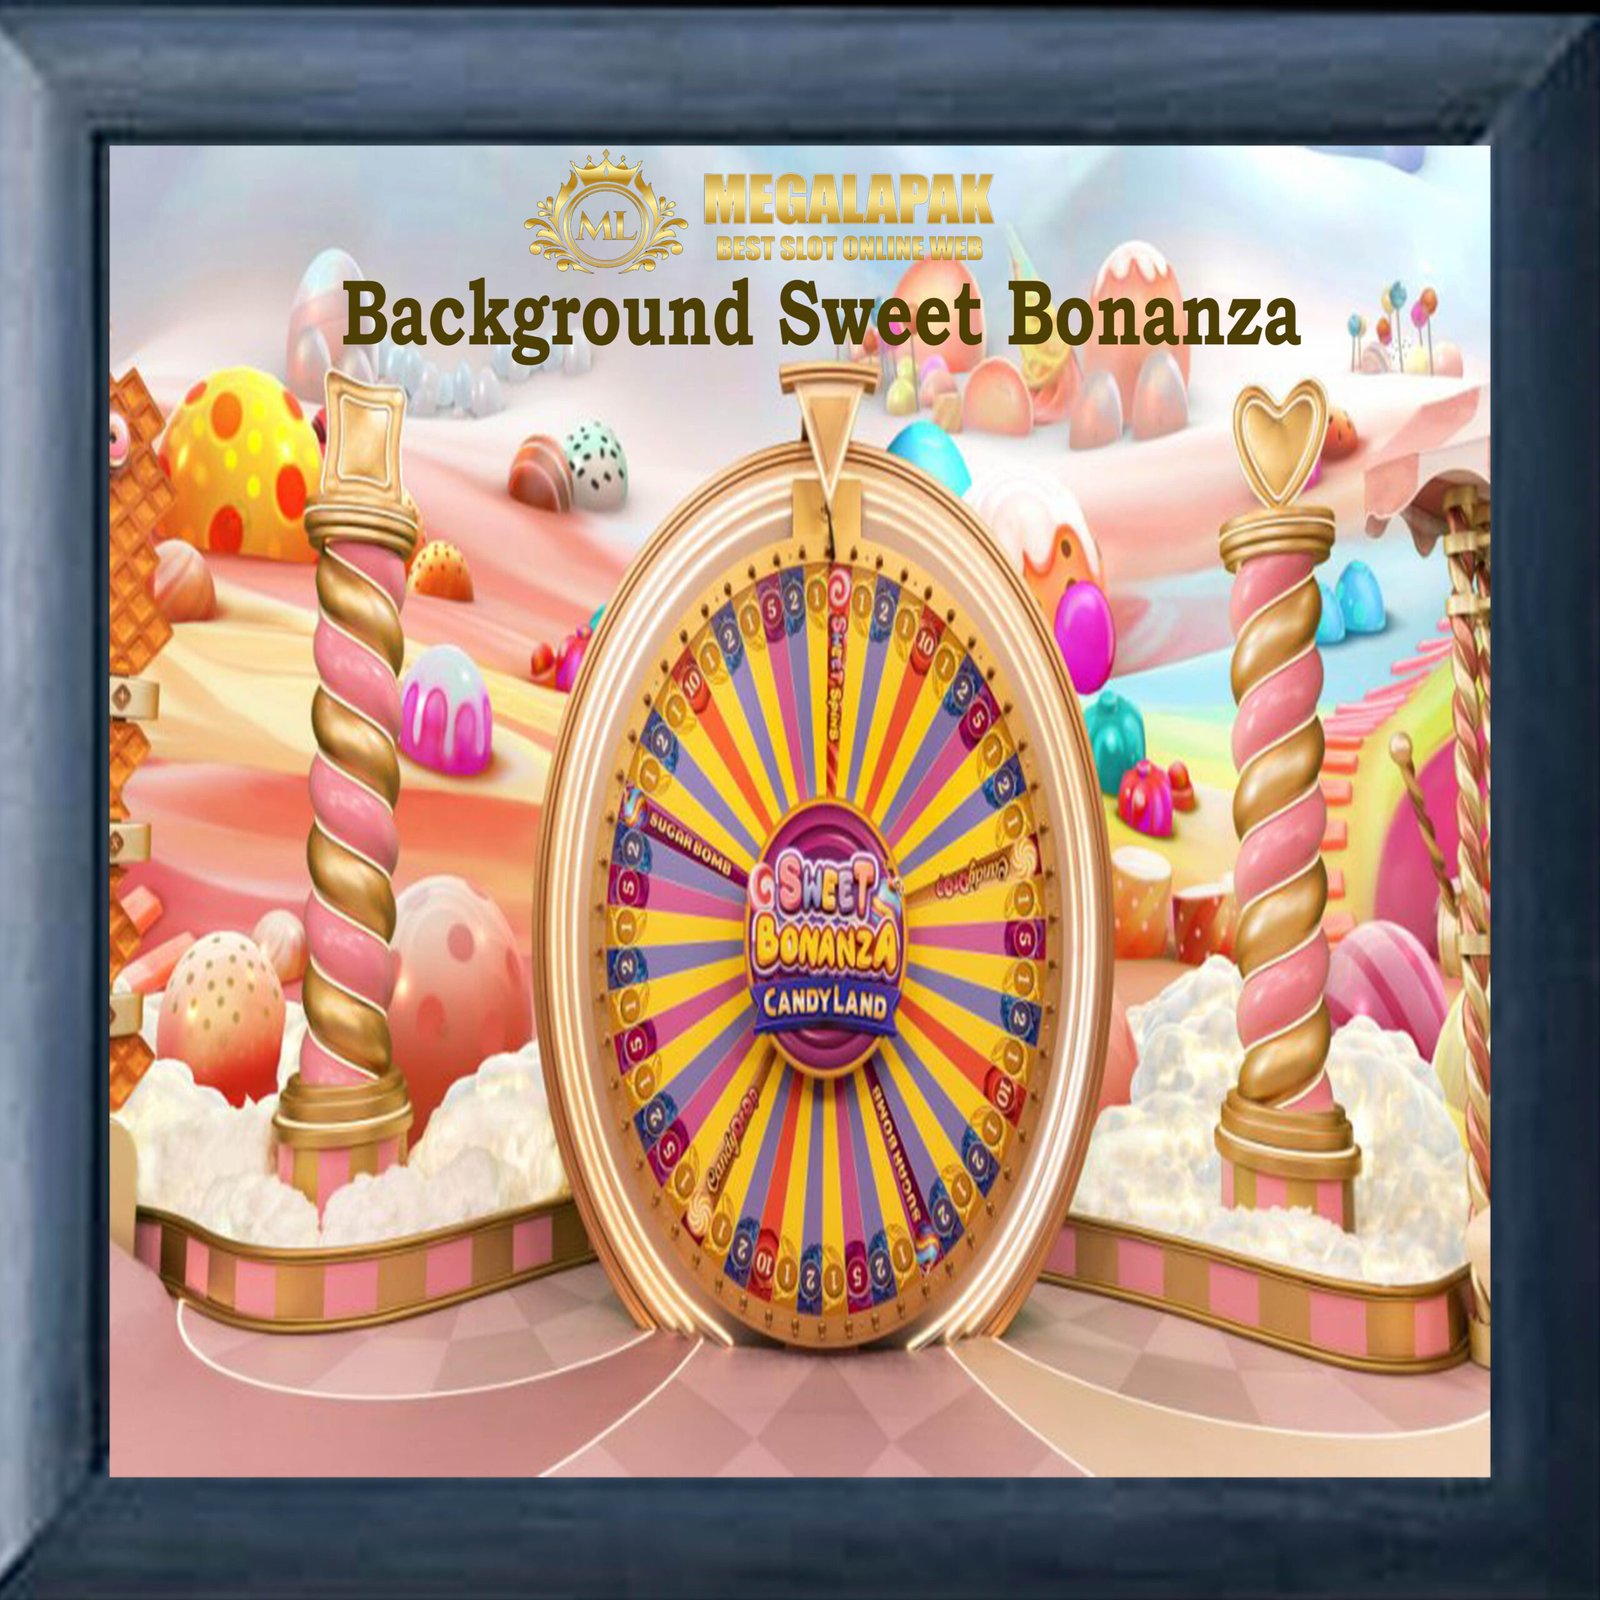 Background Sweet Bonanza